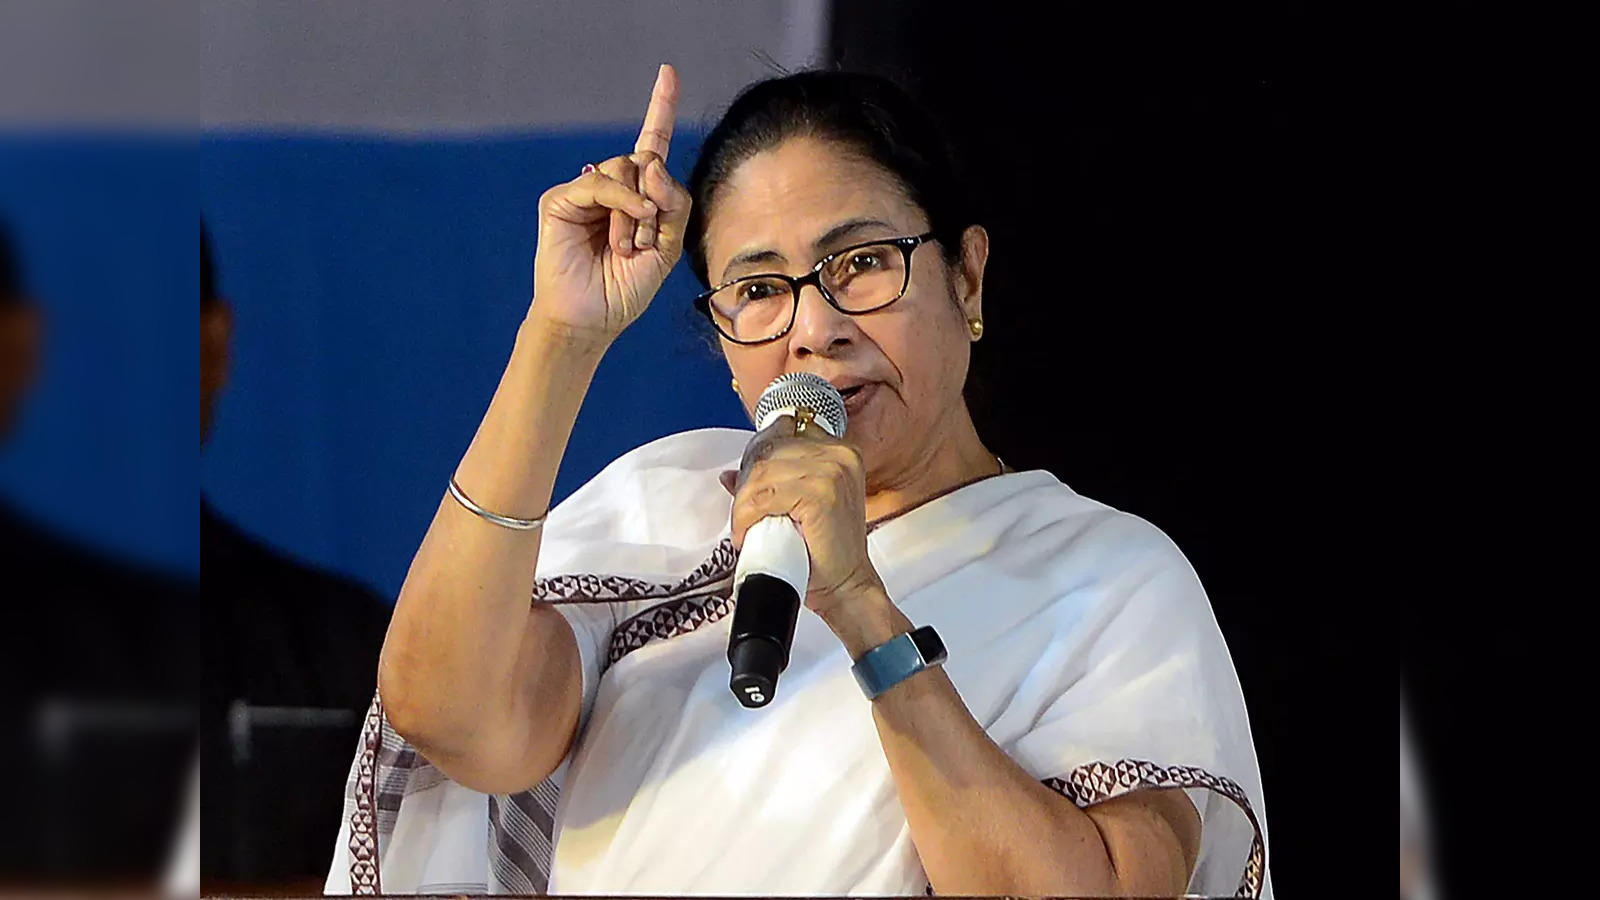 Mamata Banerjee News: Mamata Banerjee urges judiciary “not to take people's  jobs" - The Economic Times